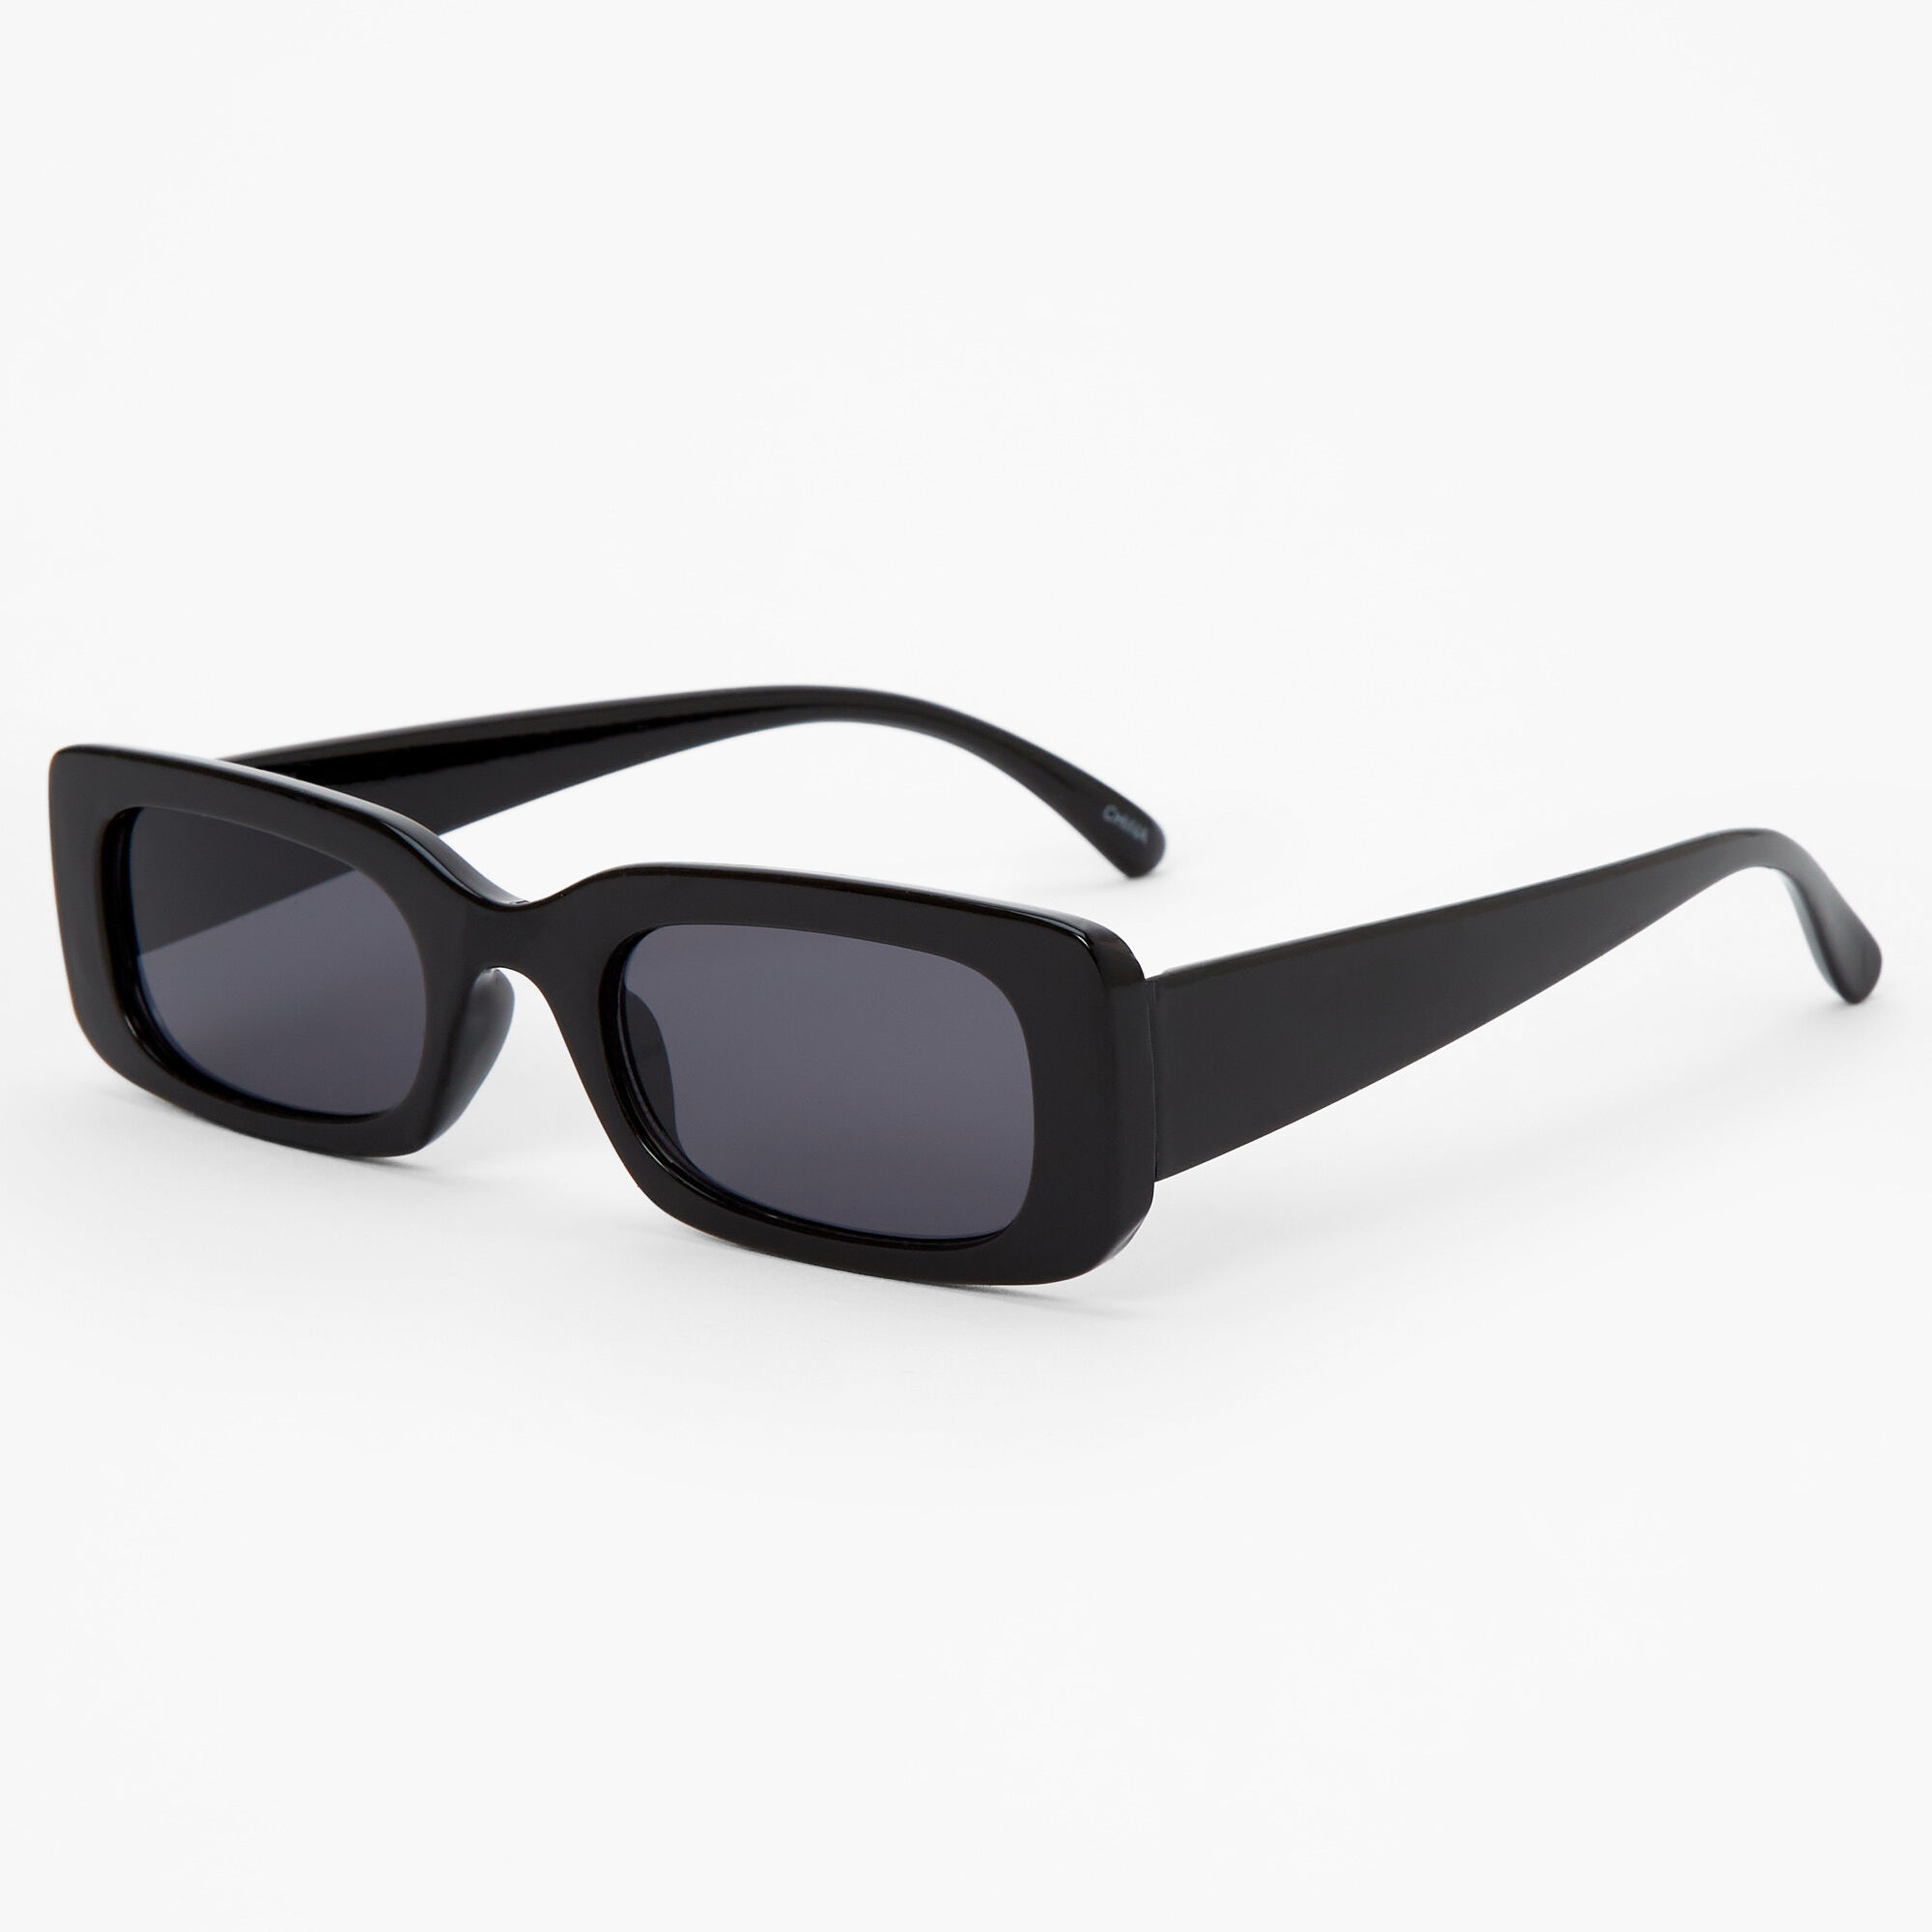 View Claires Rectangular Retro Sunglasses Black information